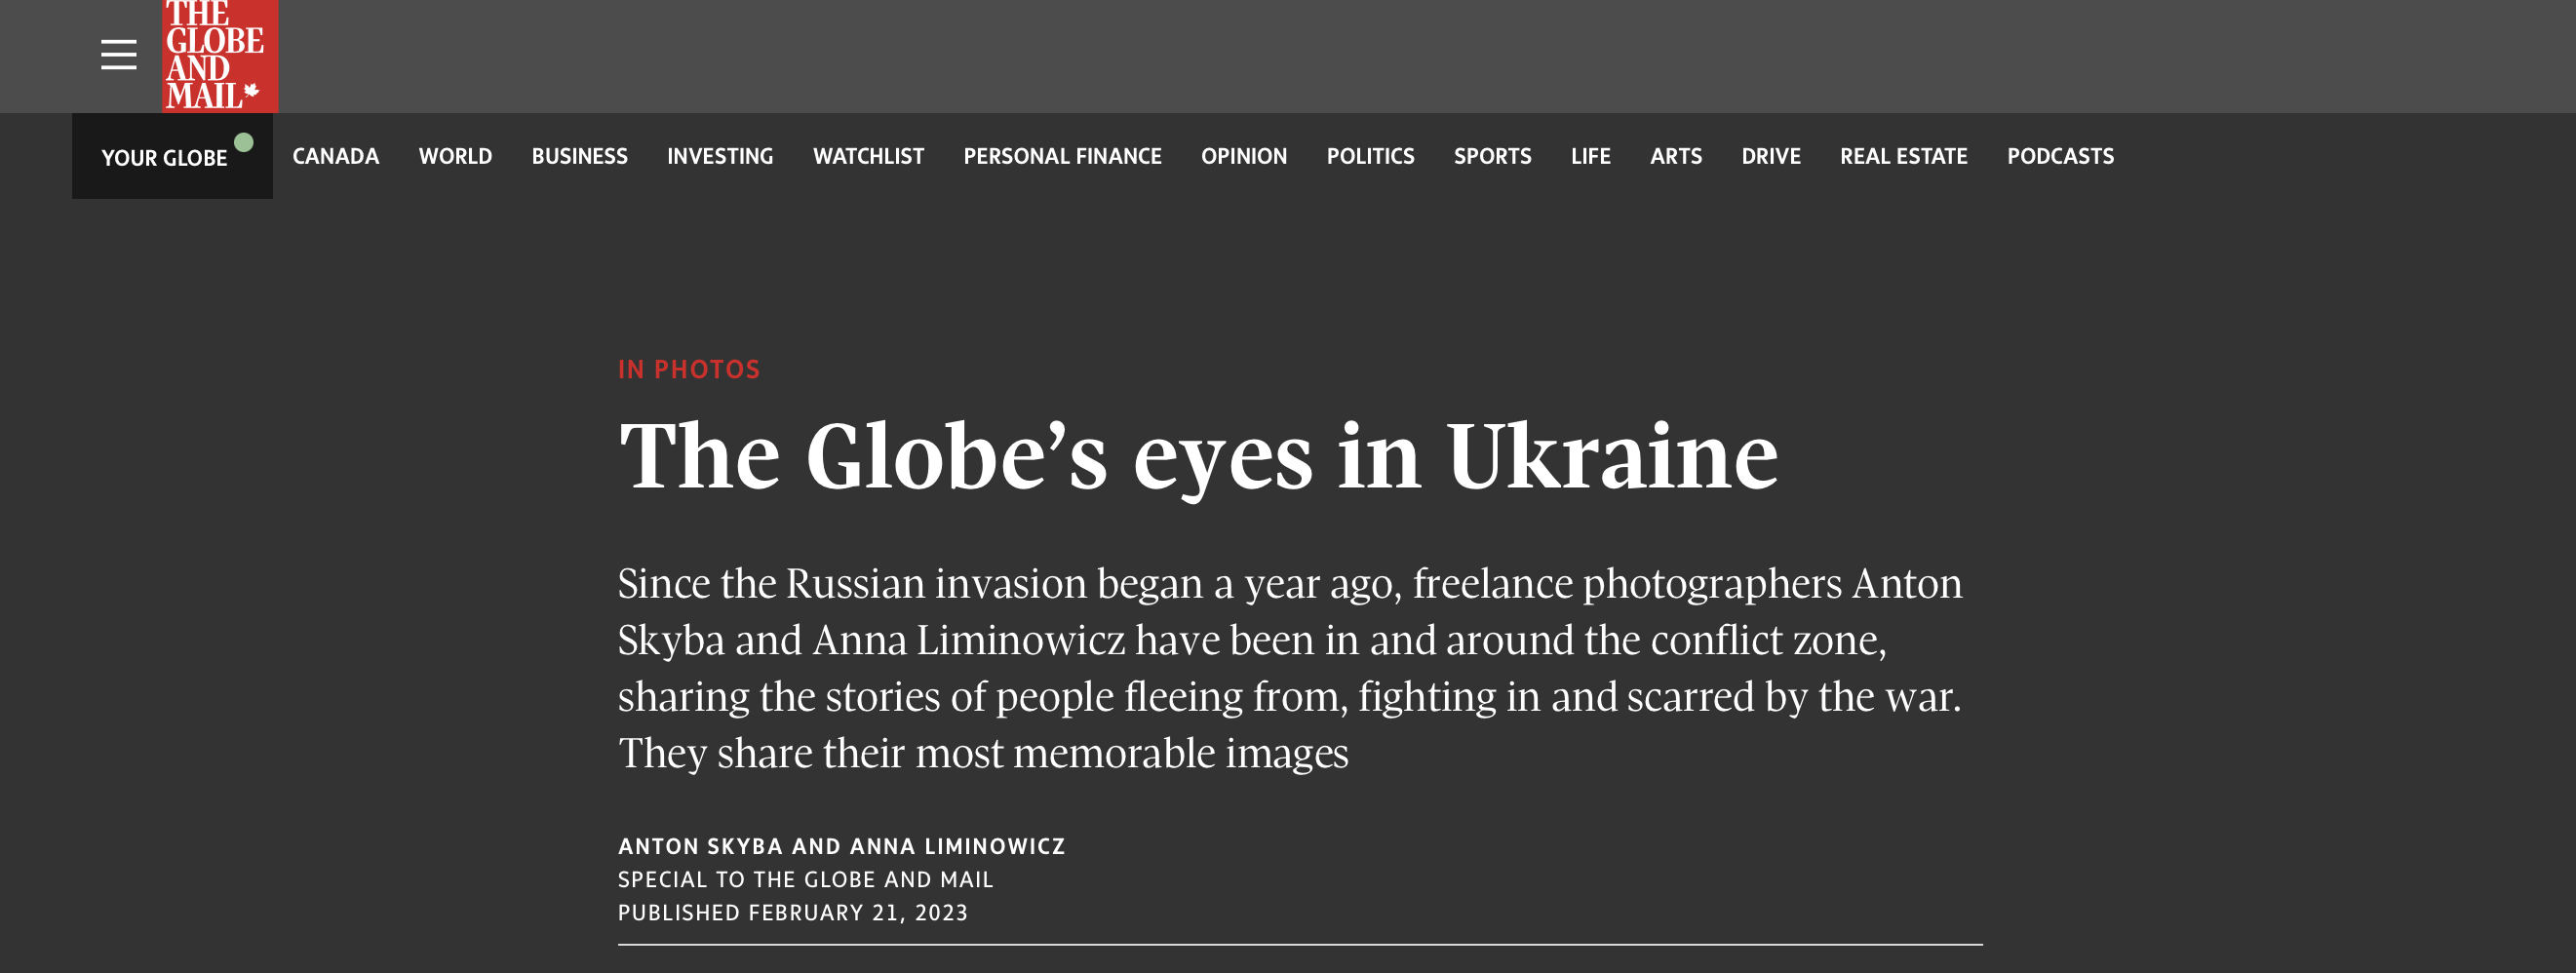 The Globe’s eyes in Ukraine